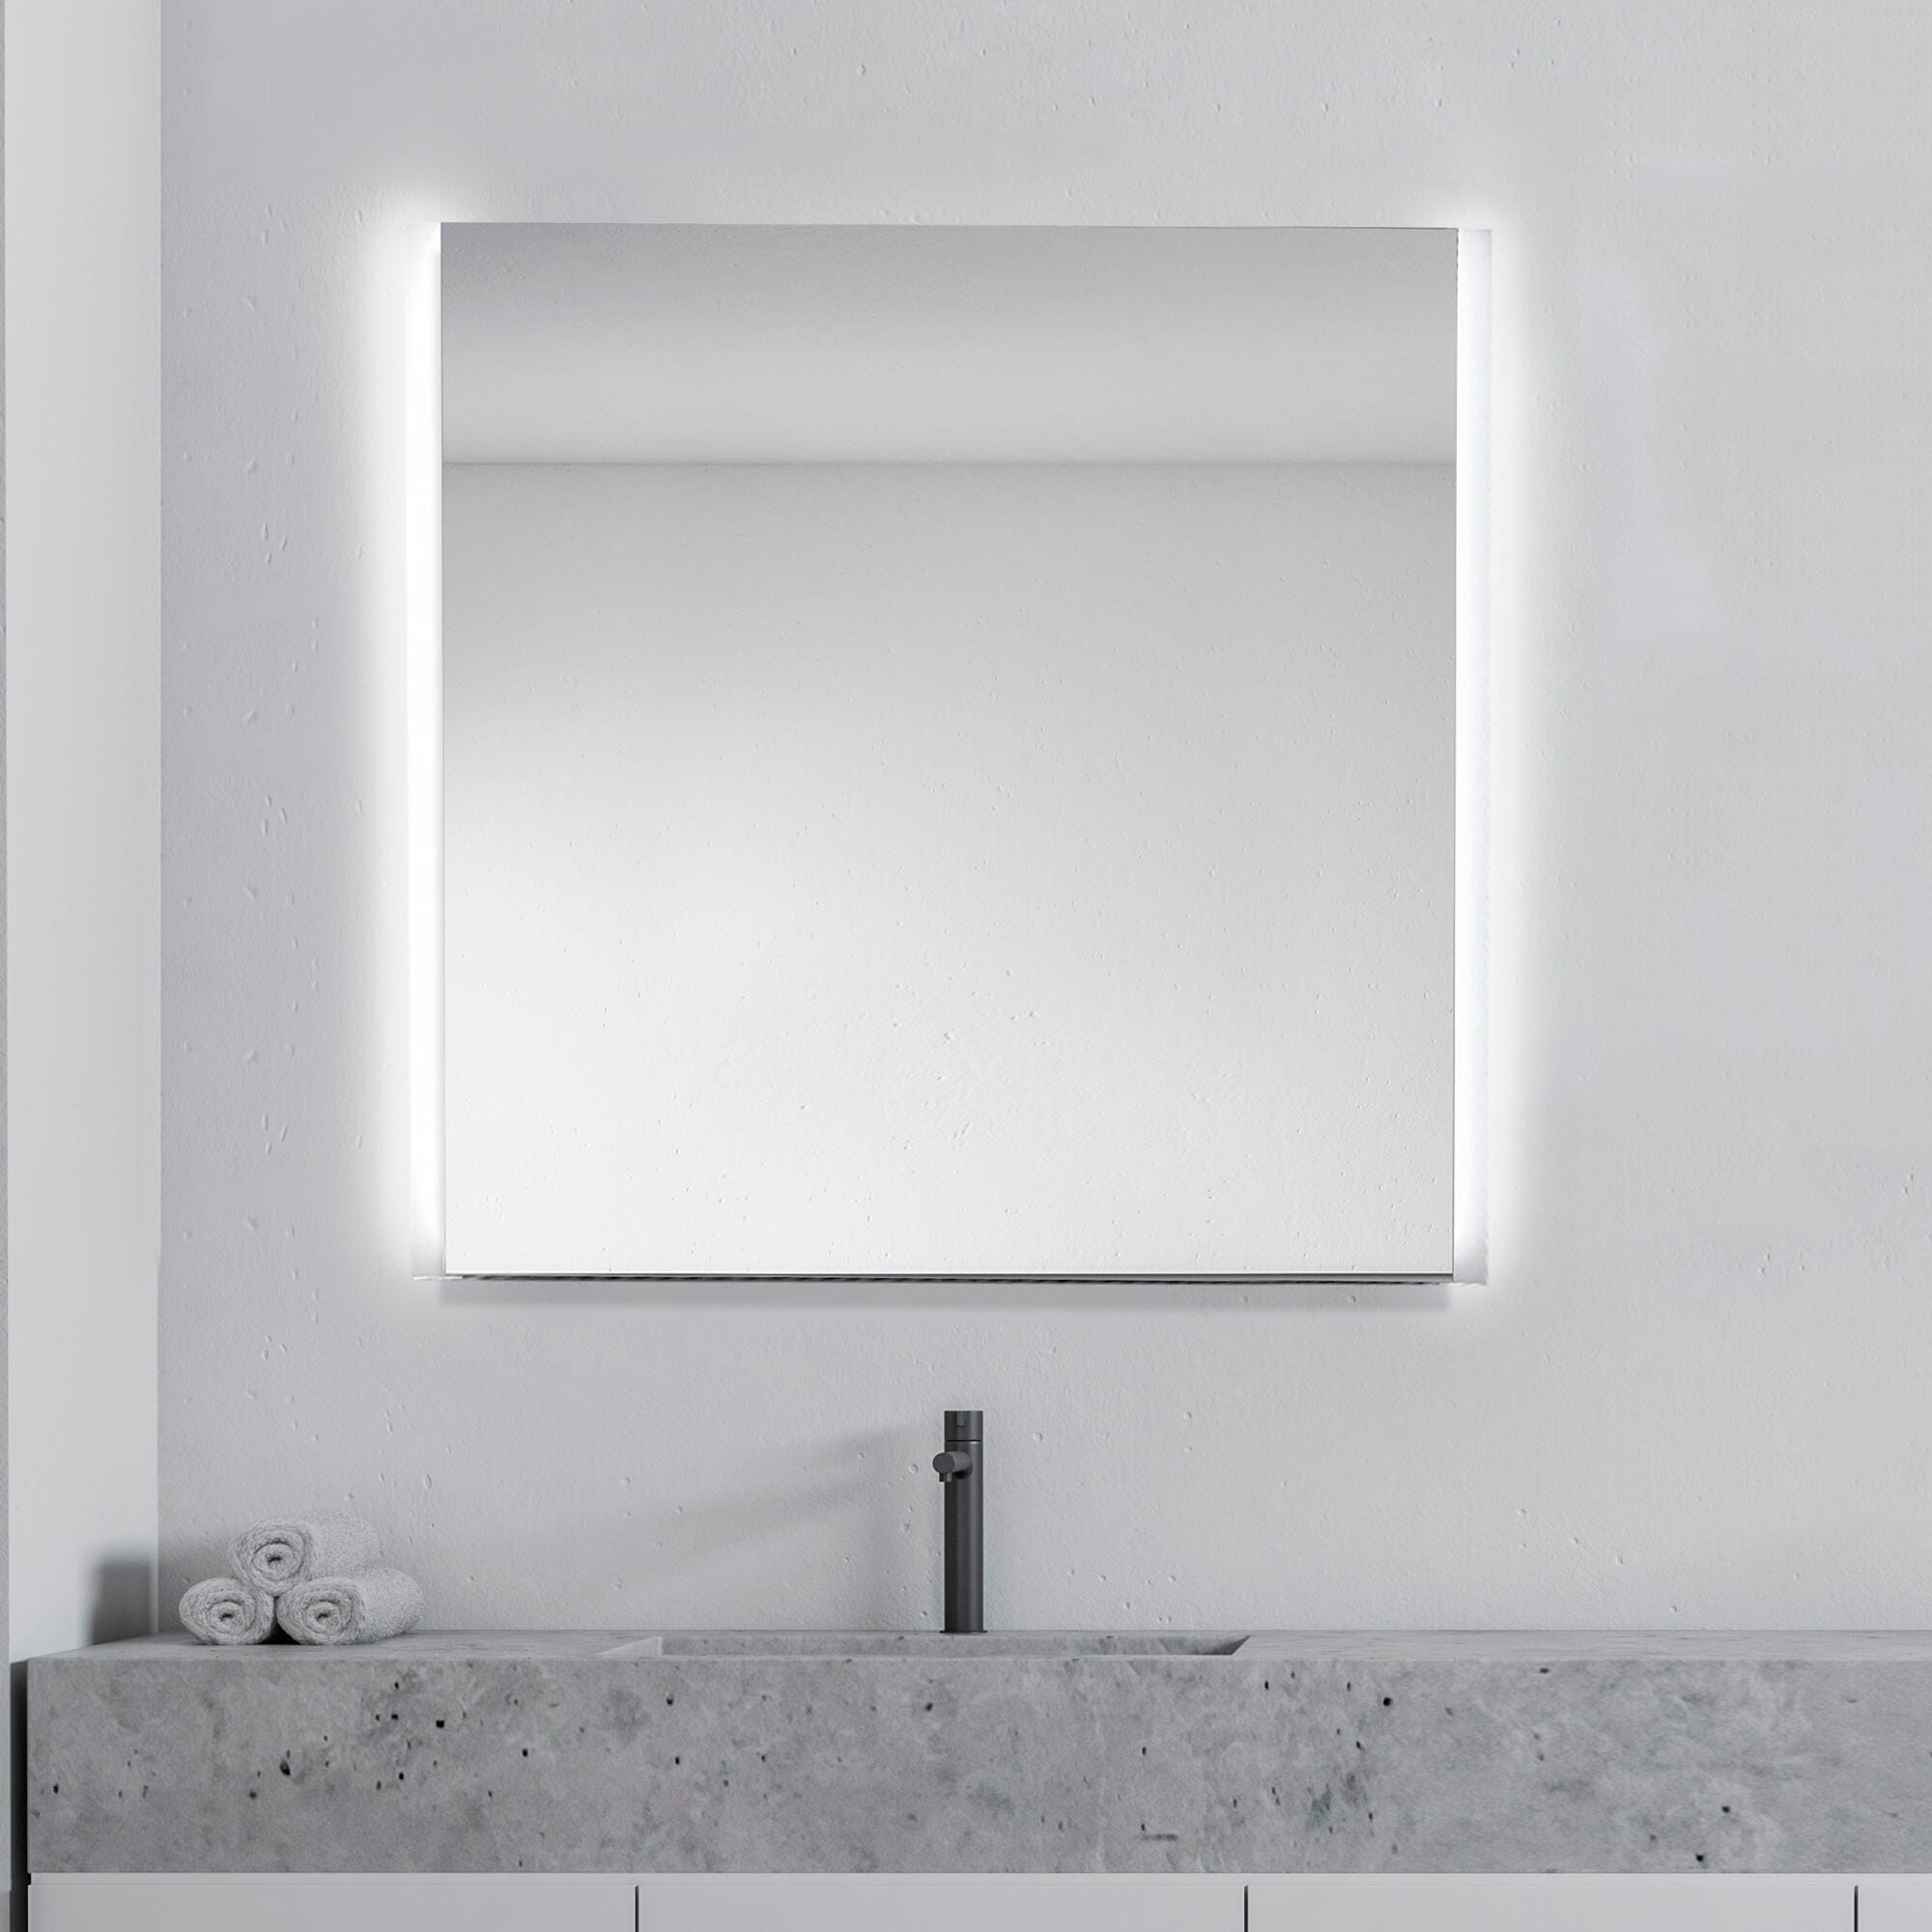 Espejo de baño con luz LED National 80x80 cm, Leroy Merlin